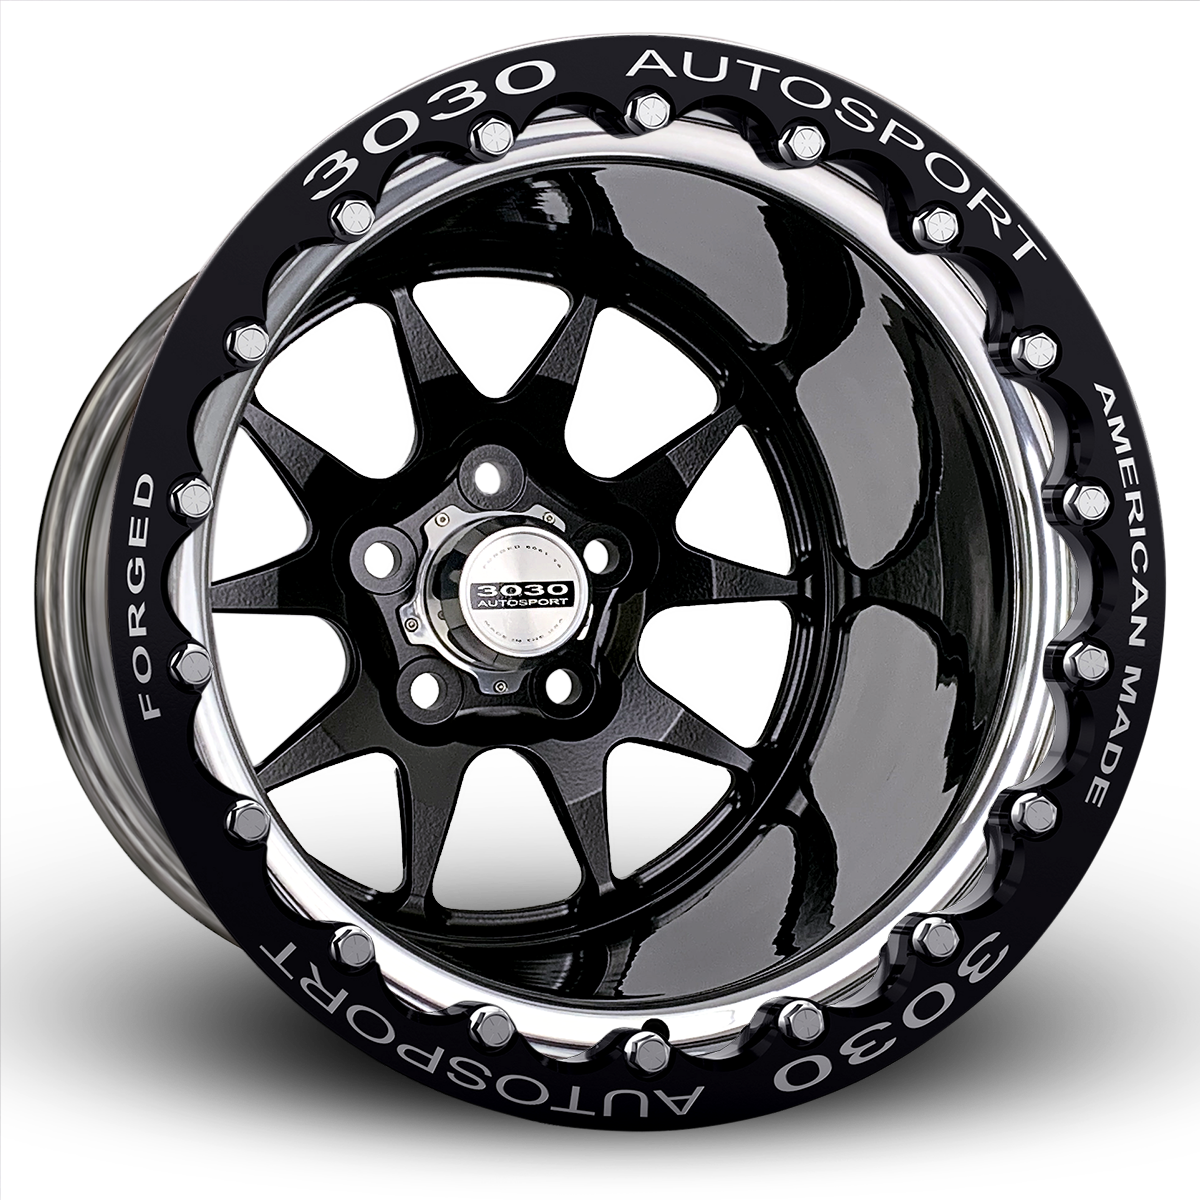 MACH-10 Single-Beadlock Wheel, Size: 15x14", Bolt Pattern: 5x5", Backspace: 3.500" [Black/Polished]